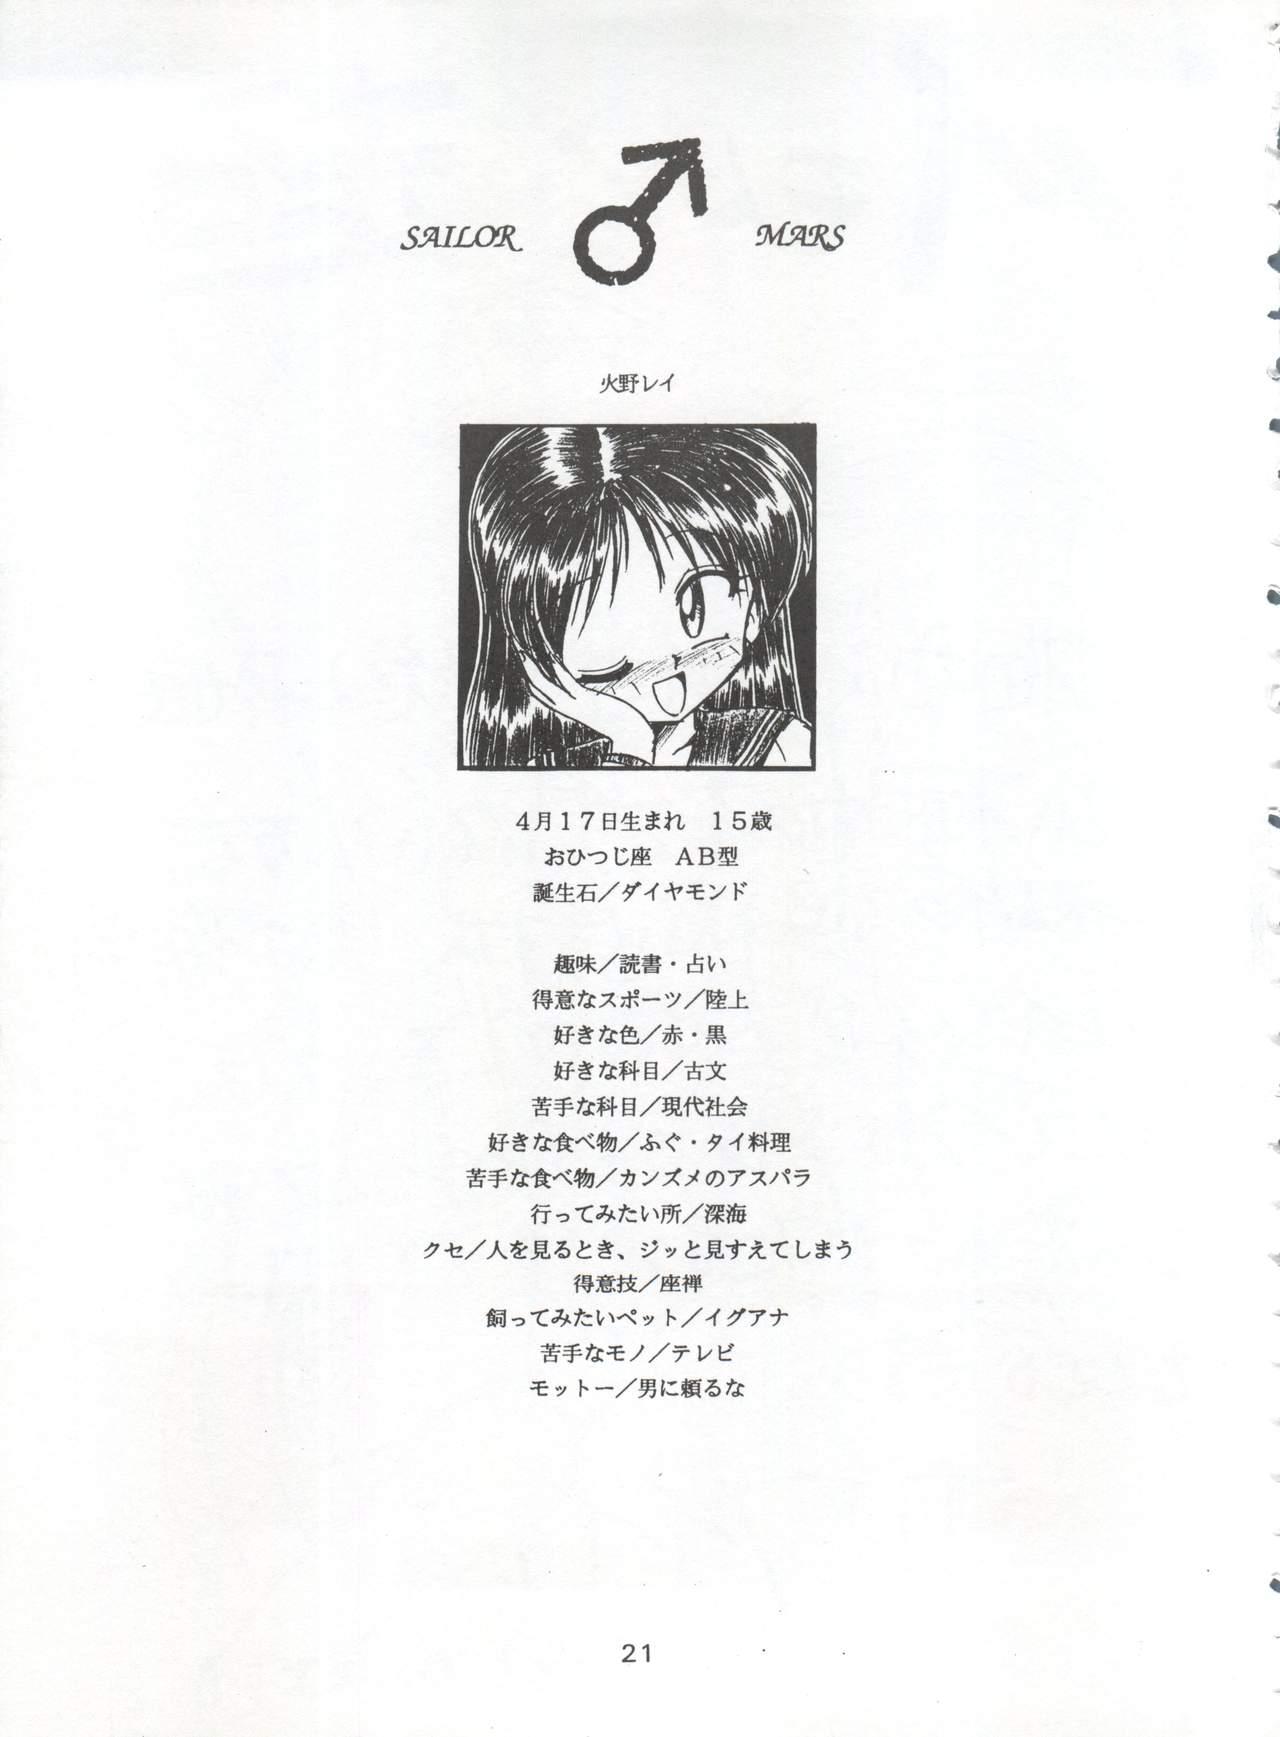 HABER EXTRA IV Shouji Umemachi Only Book 3 - SOLO 20